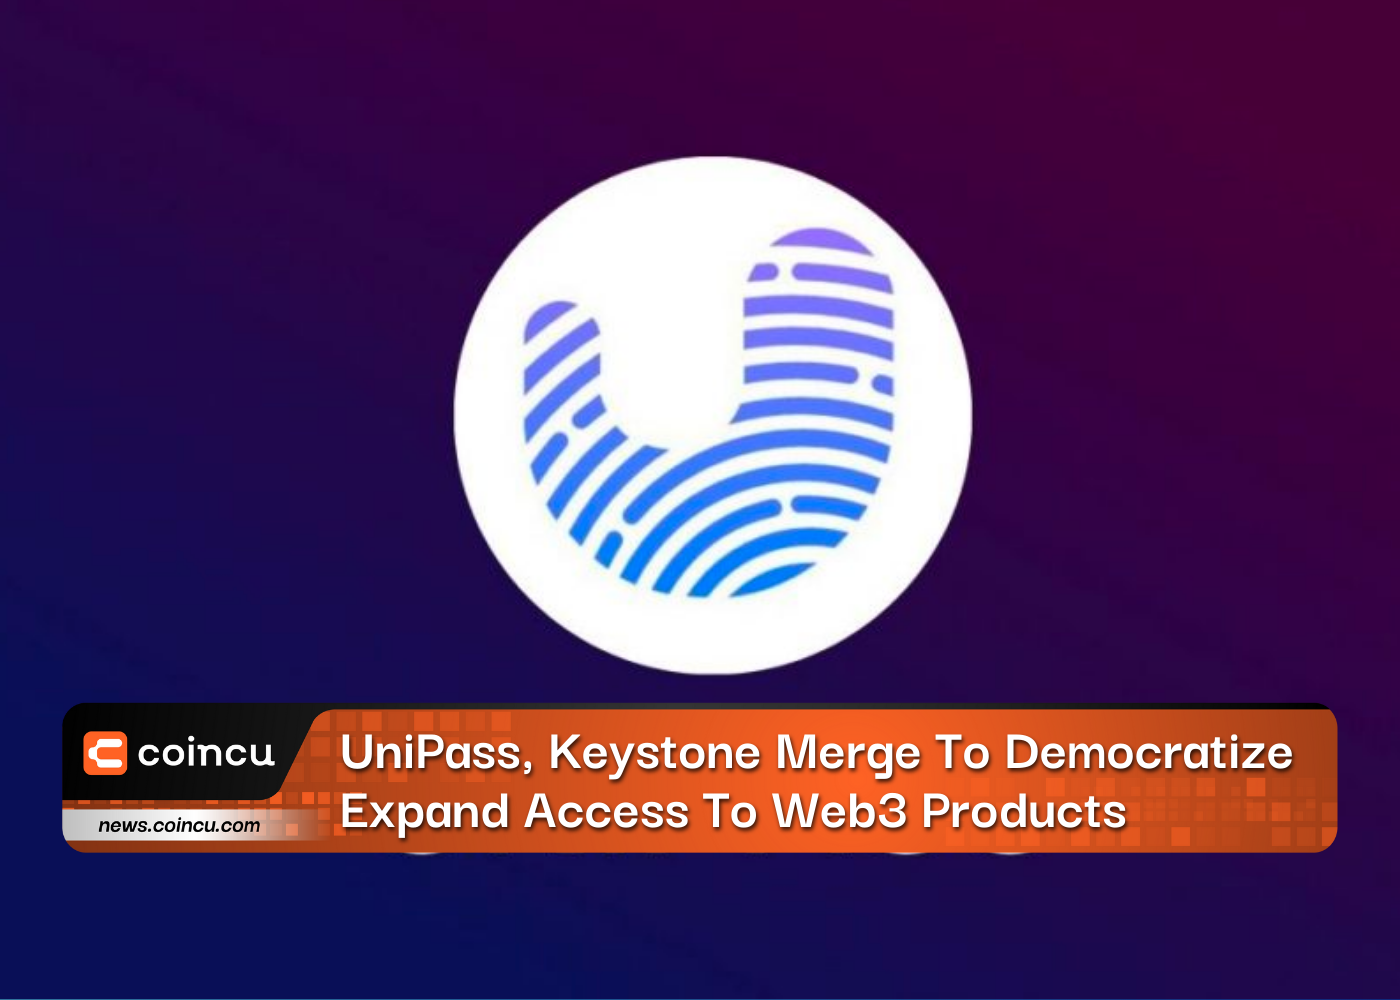 UniPass, Keystone Merge To Democratize Expand Access To Web3 Products